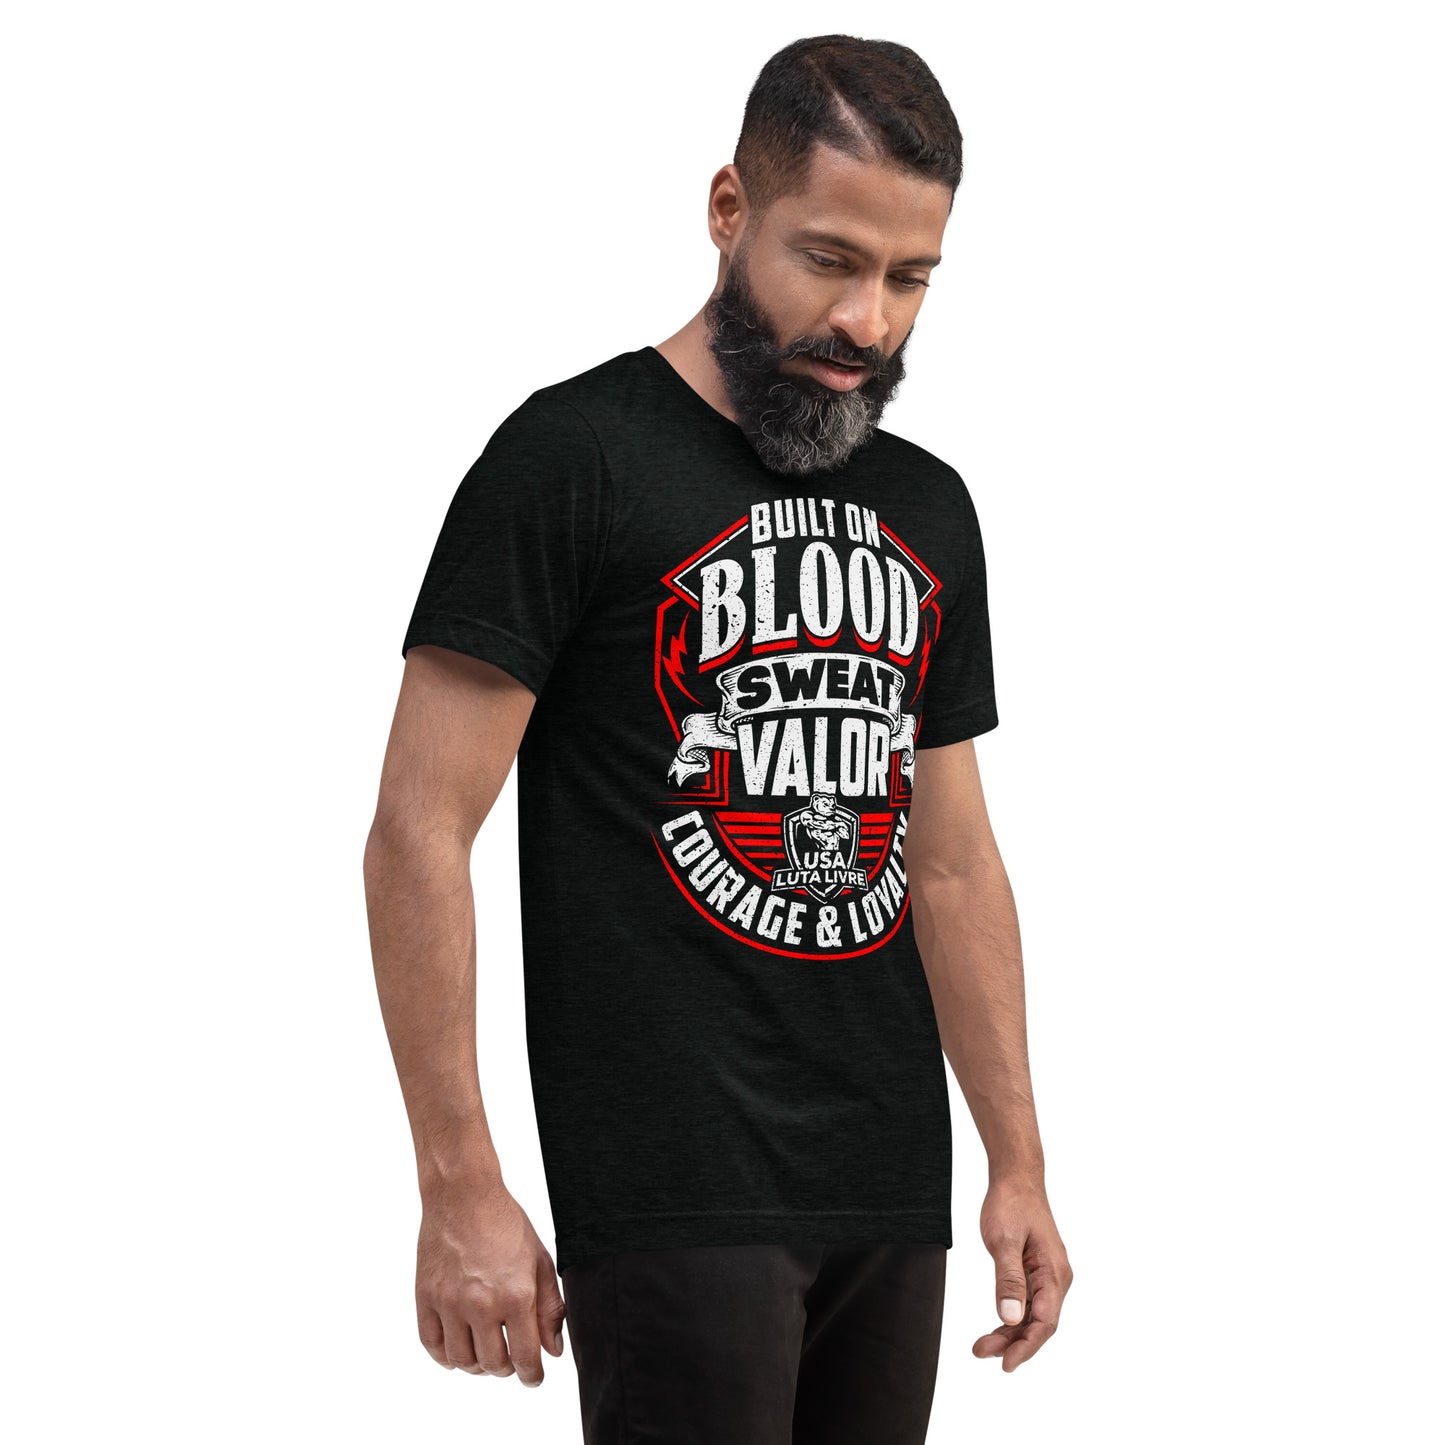 USA Luta Livre™ Valor short sleeve t-shirt